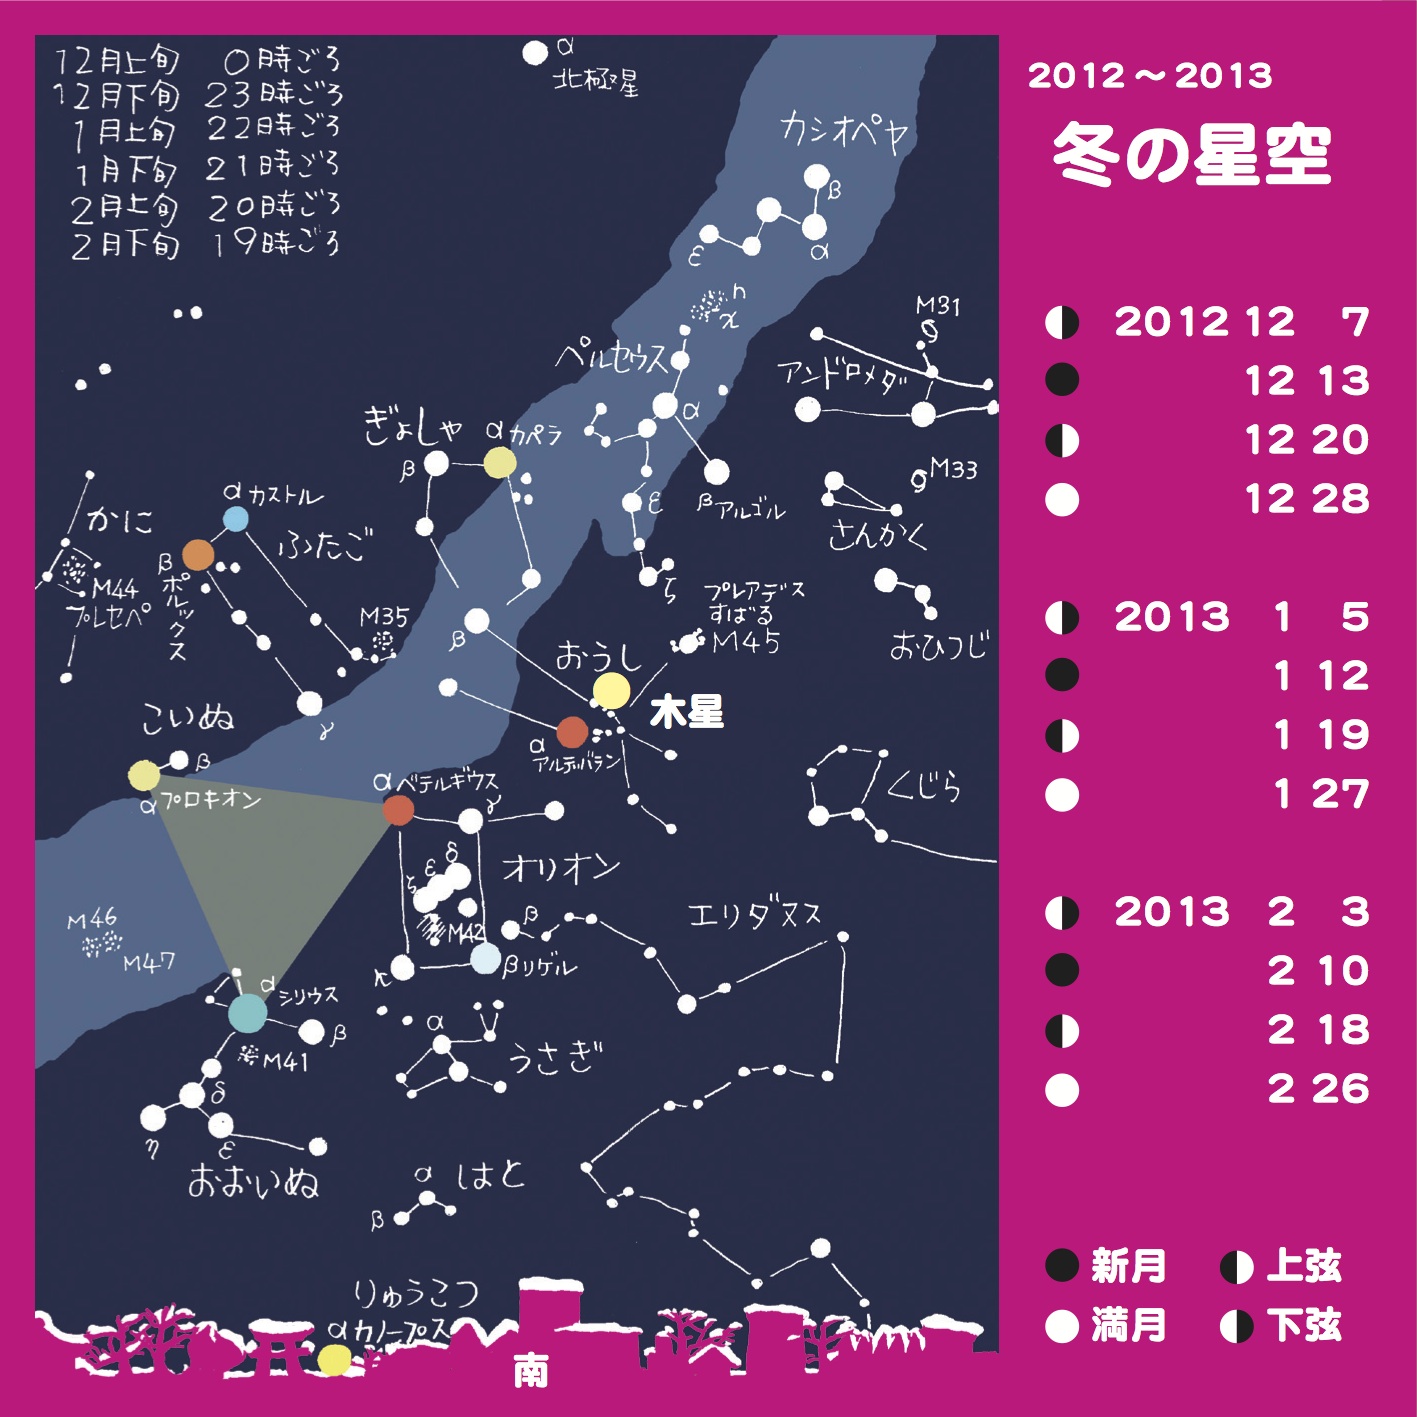 http://www.ncsm.city.nagoya.jp/study/astro/P2_2013_winter.jpg